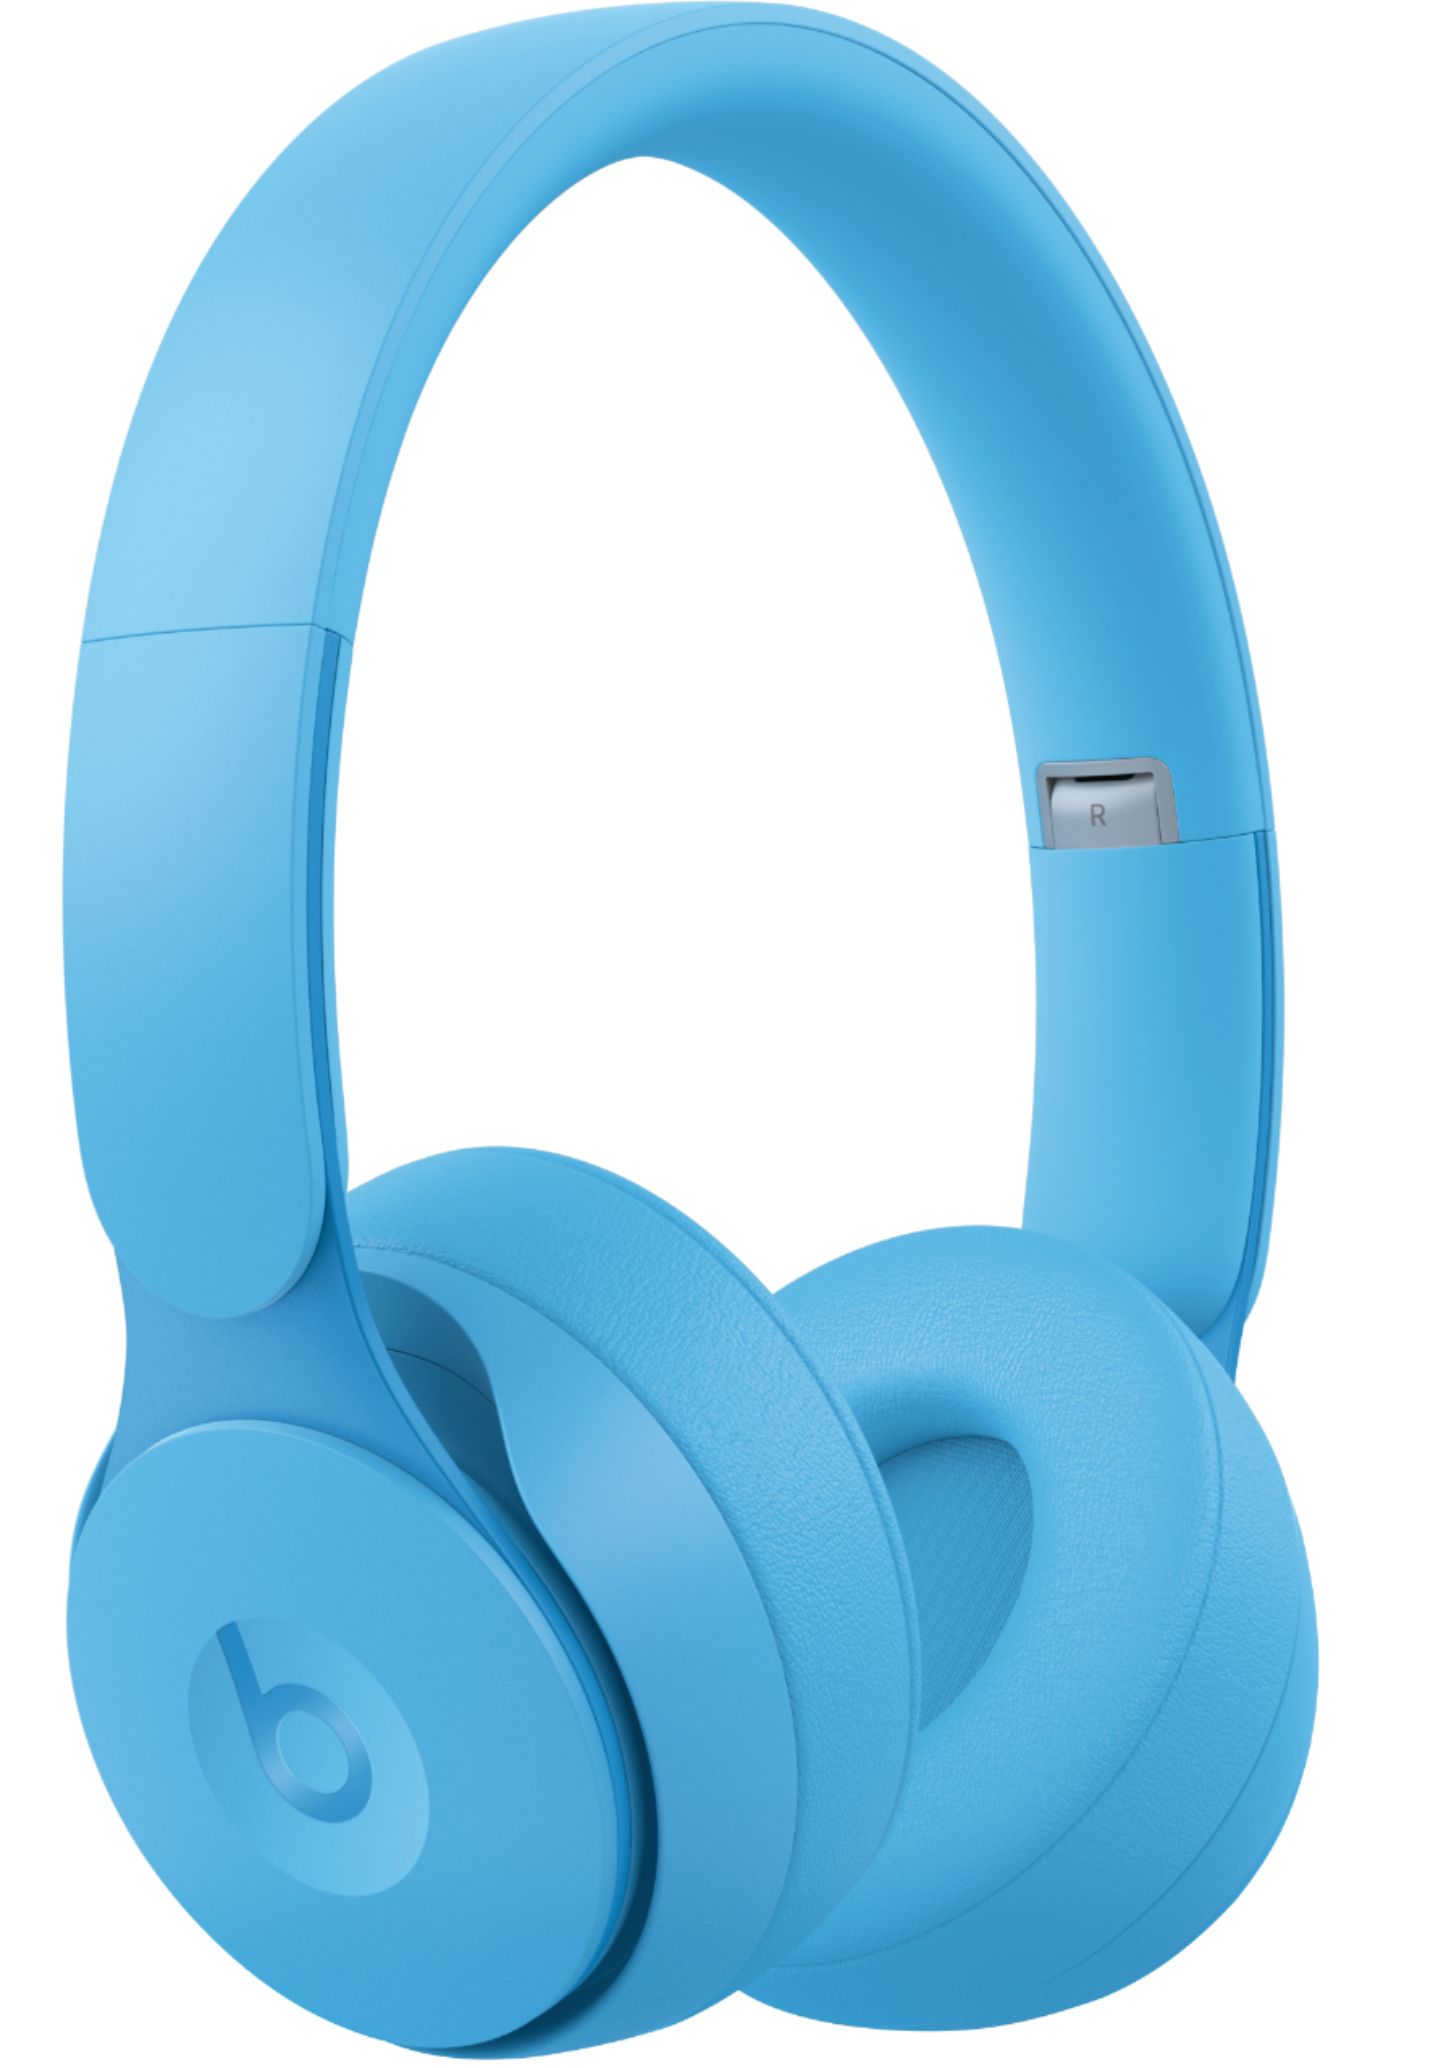 Gade I udlandet hjemme Beats by Dr. Dre Solo Pro More Matte Collection Wireless Noise Cancelling  On-Ear Headphones Light Blue MRJ92LL/A - Best Buy